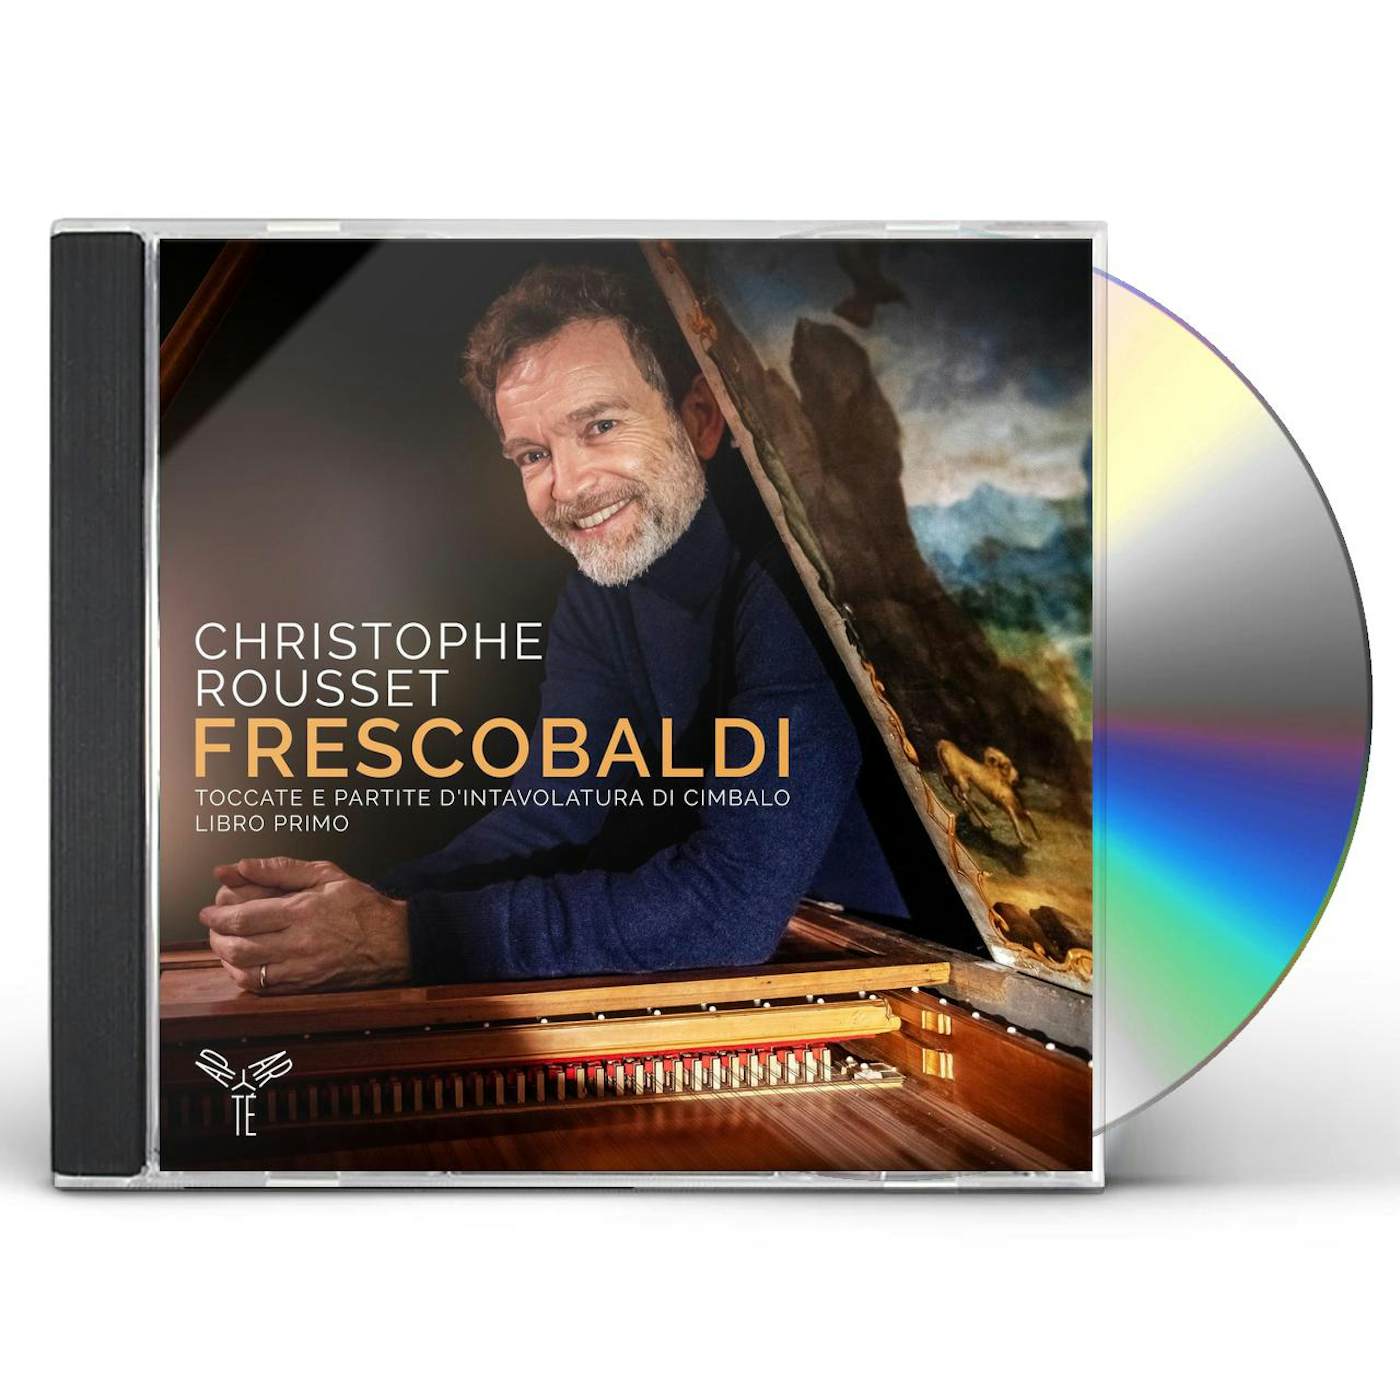 Christophe Rousset Frescobaldi: Toccate E Partite D'Intavolatura Di Cimbalo, Libro Primo, 1615 CD